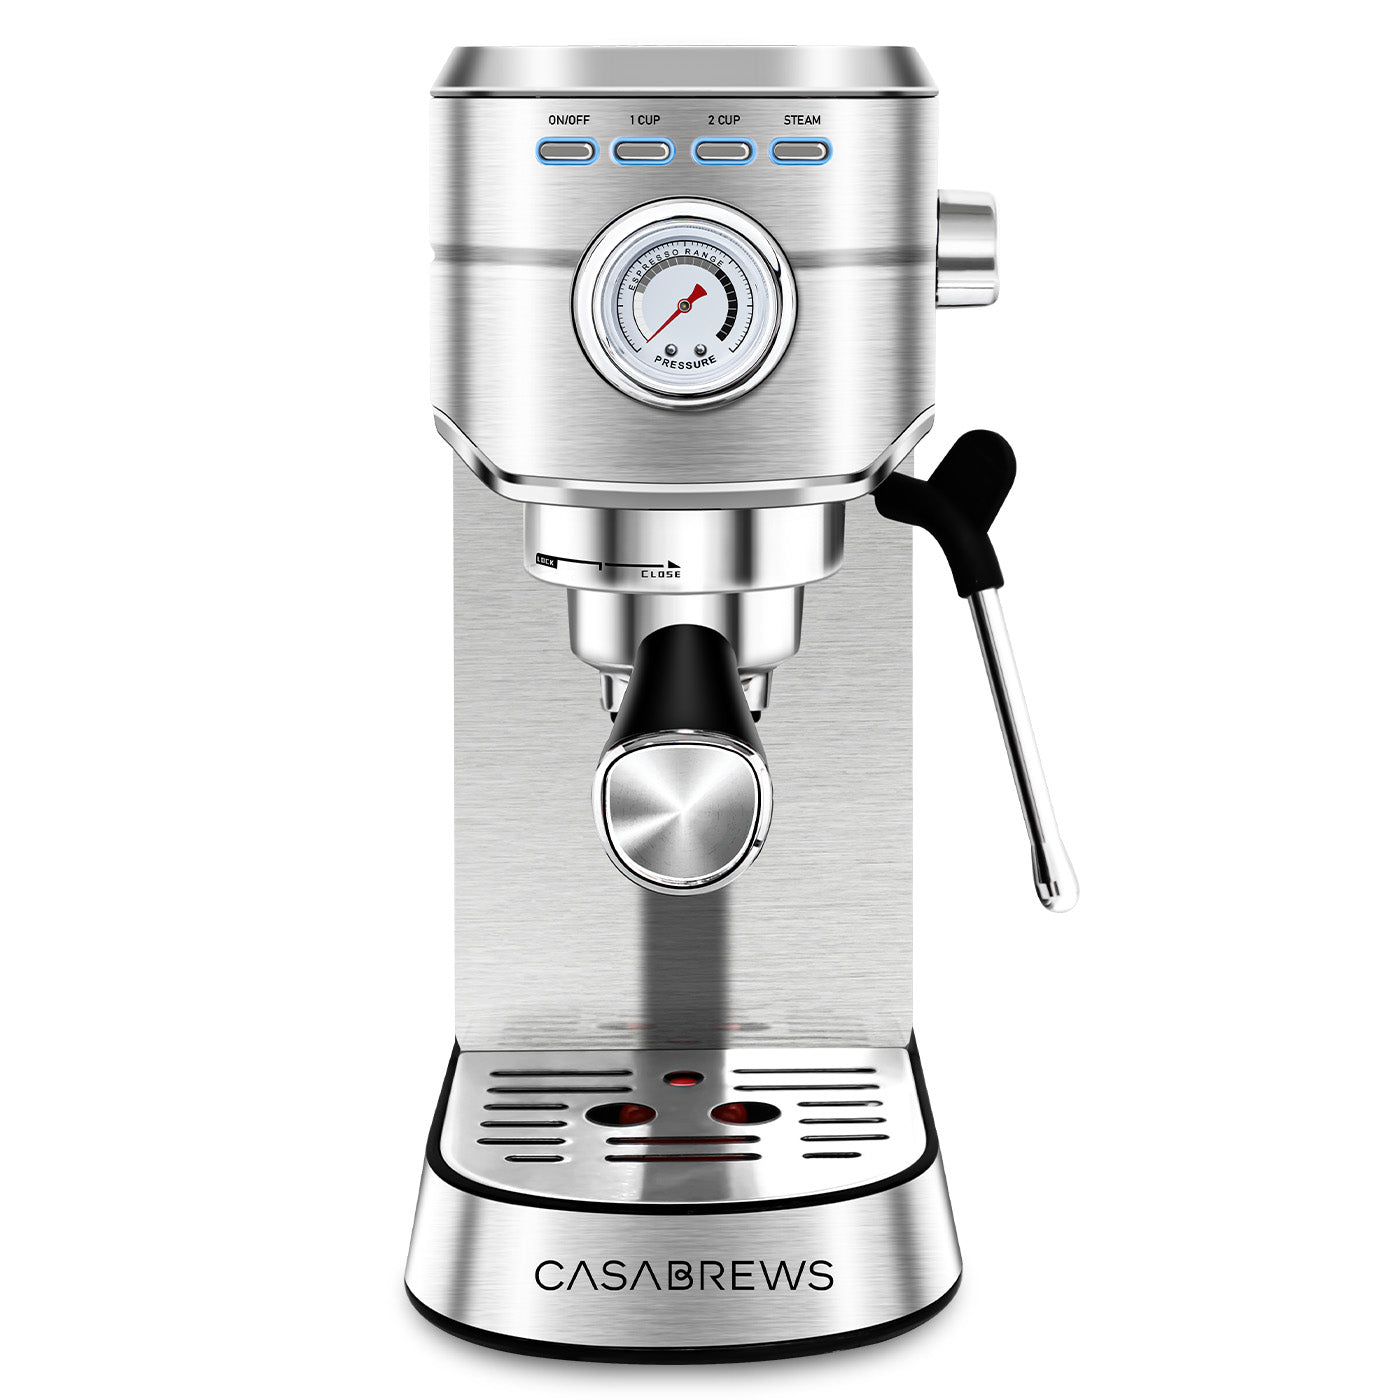 Casabrews CM1699 Casabrews Compact Espresso Machine w/ Milk Frother Wand